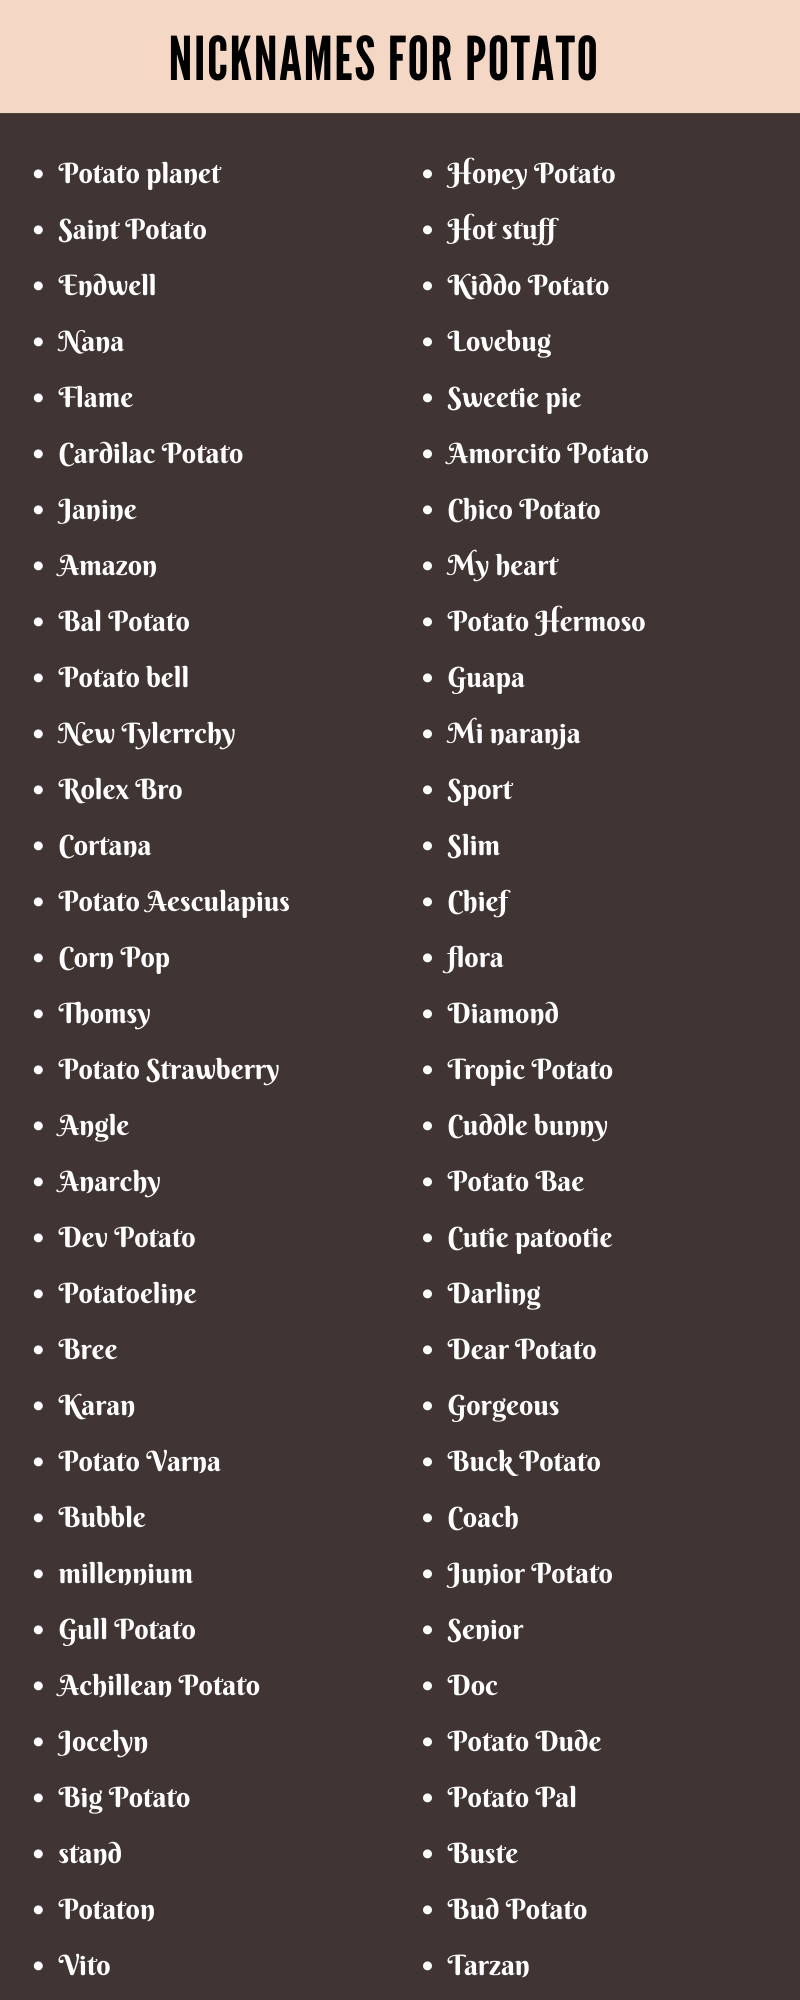 Nicknames For Potato